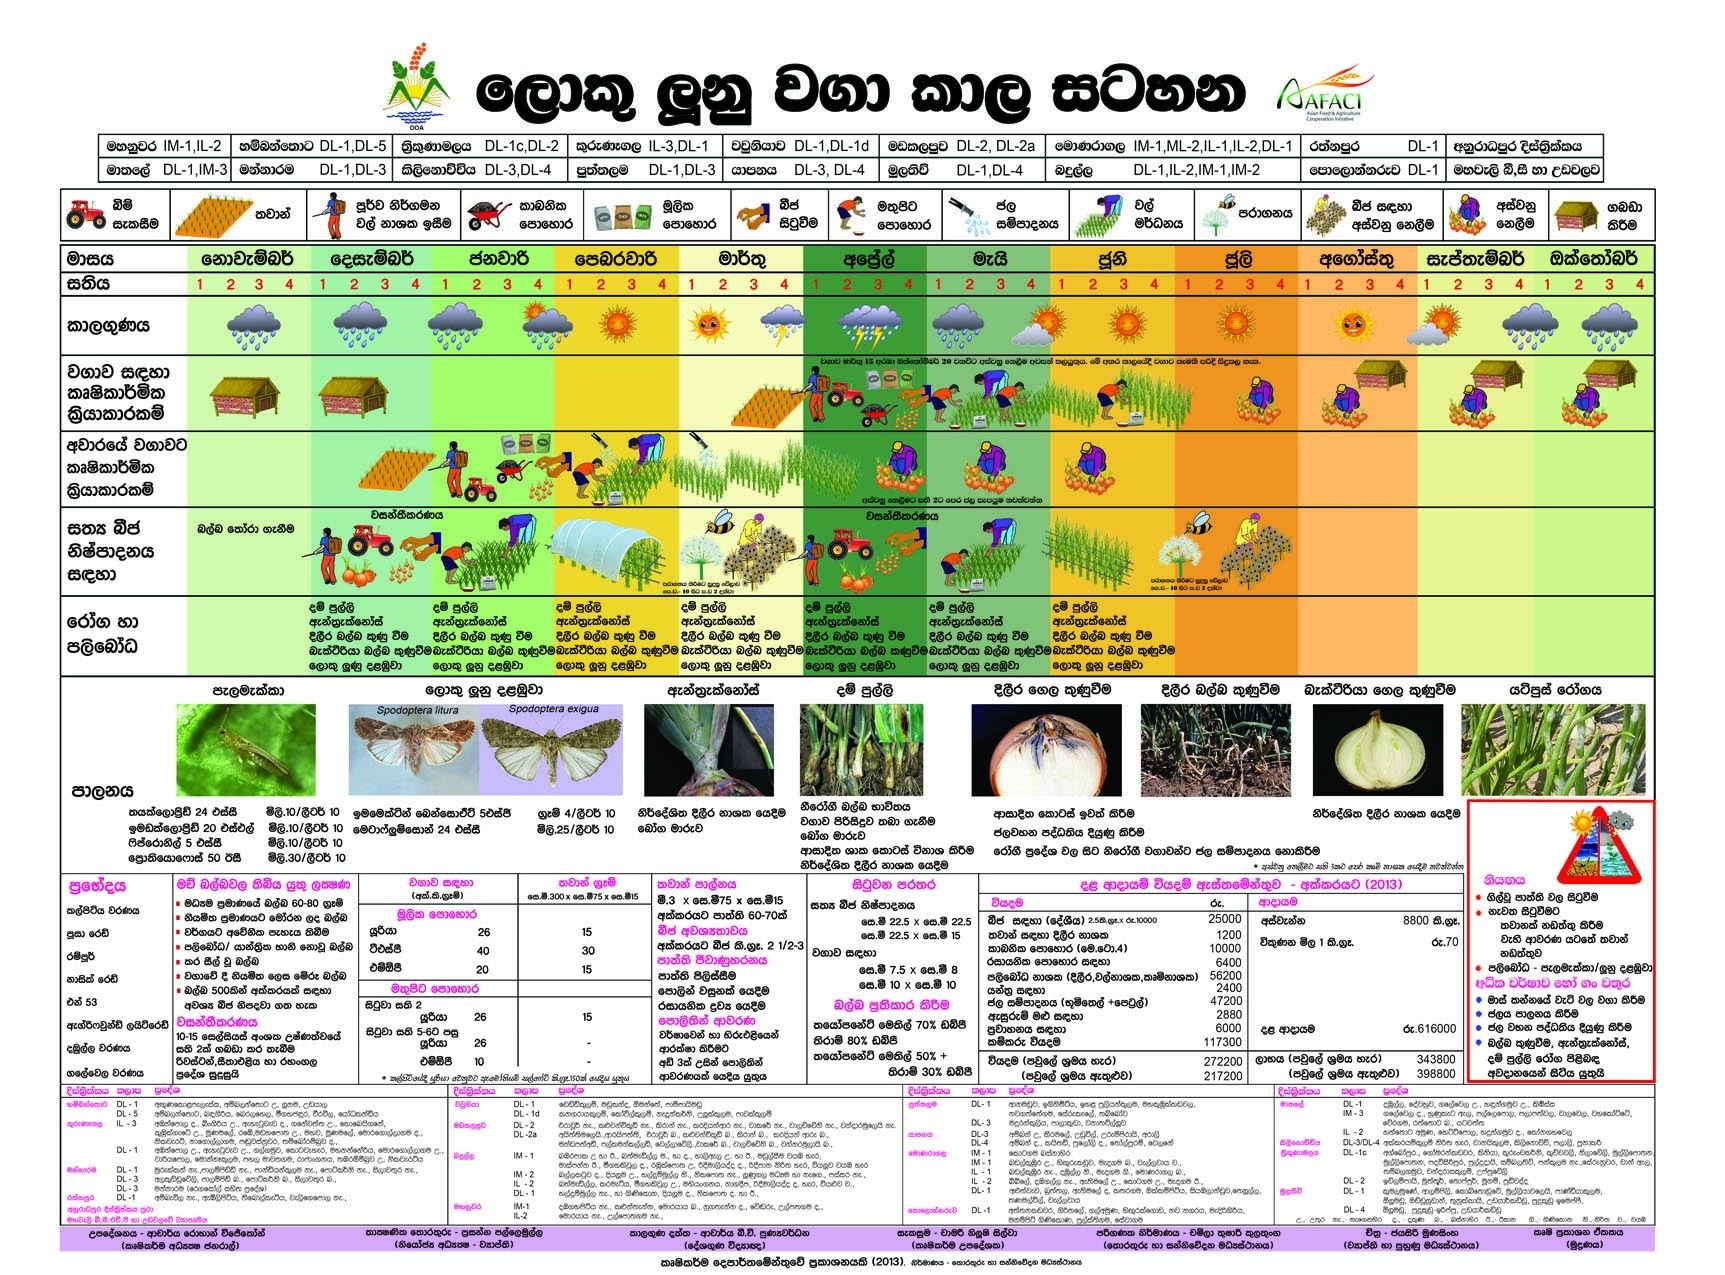 Crop Calender (2) for Crop Calender Of Sri Lanka